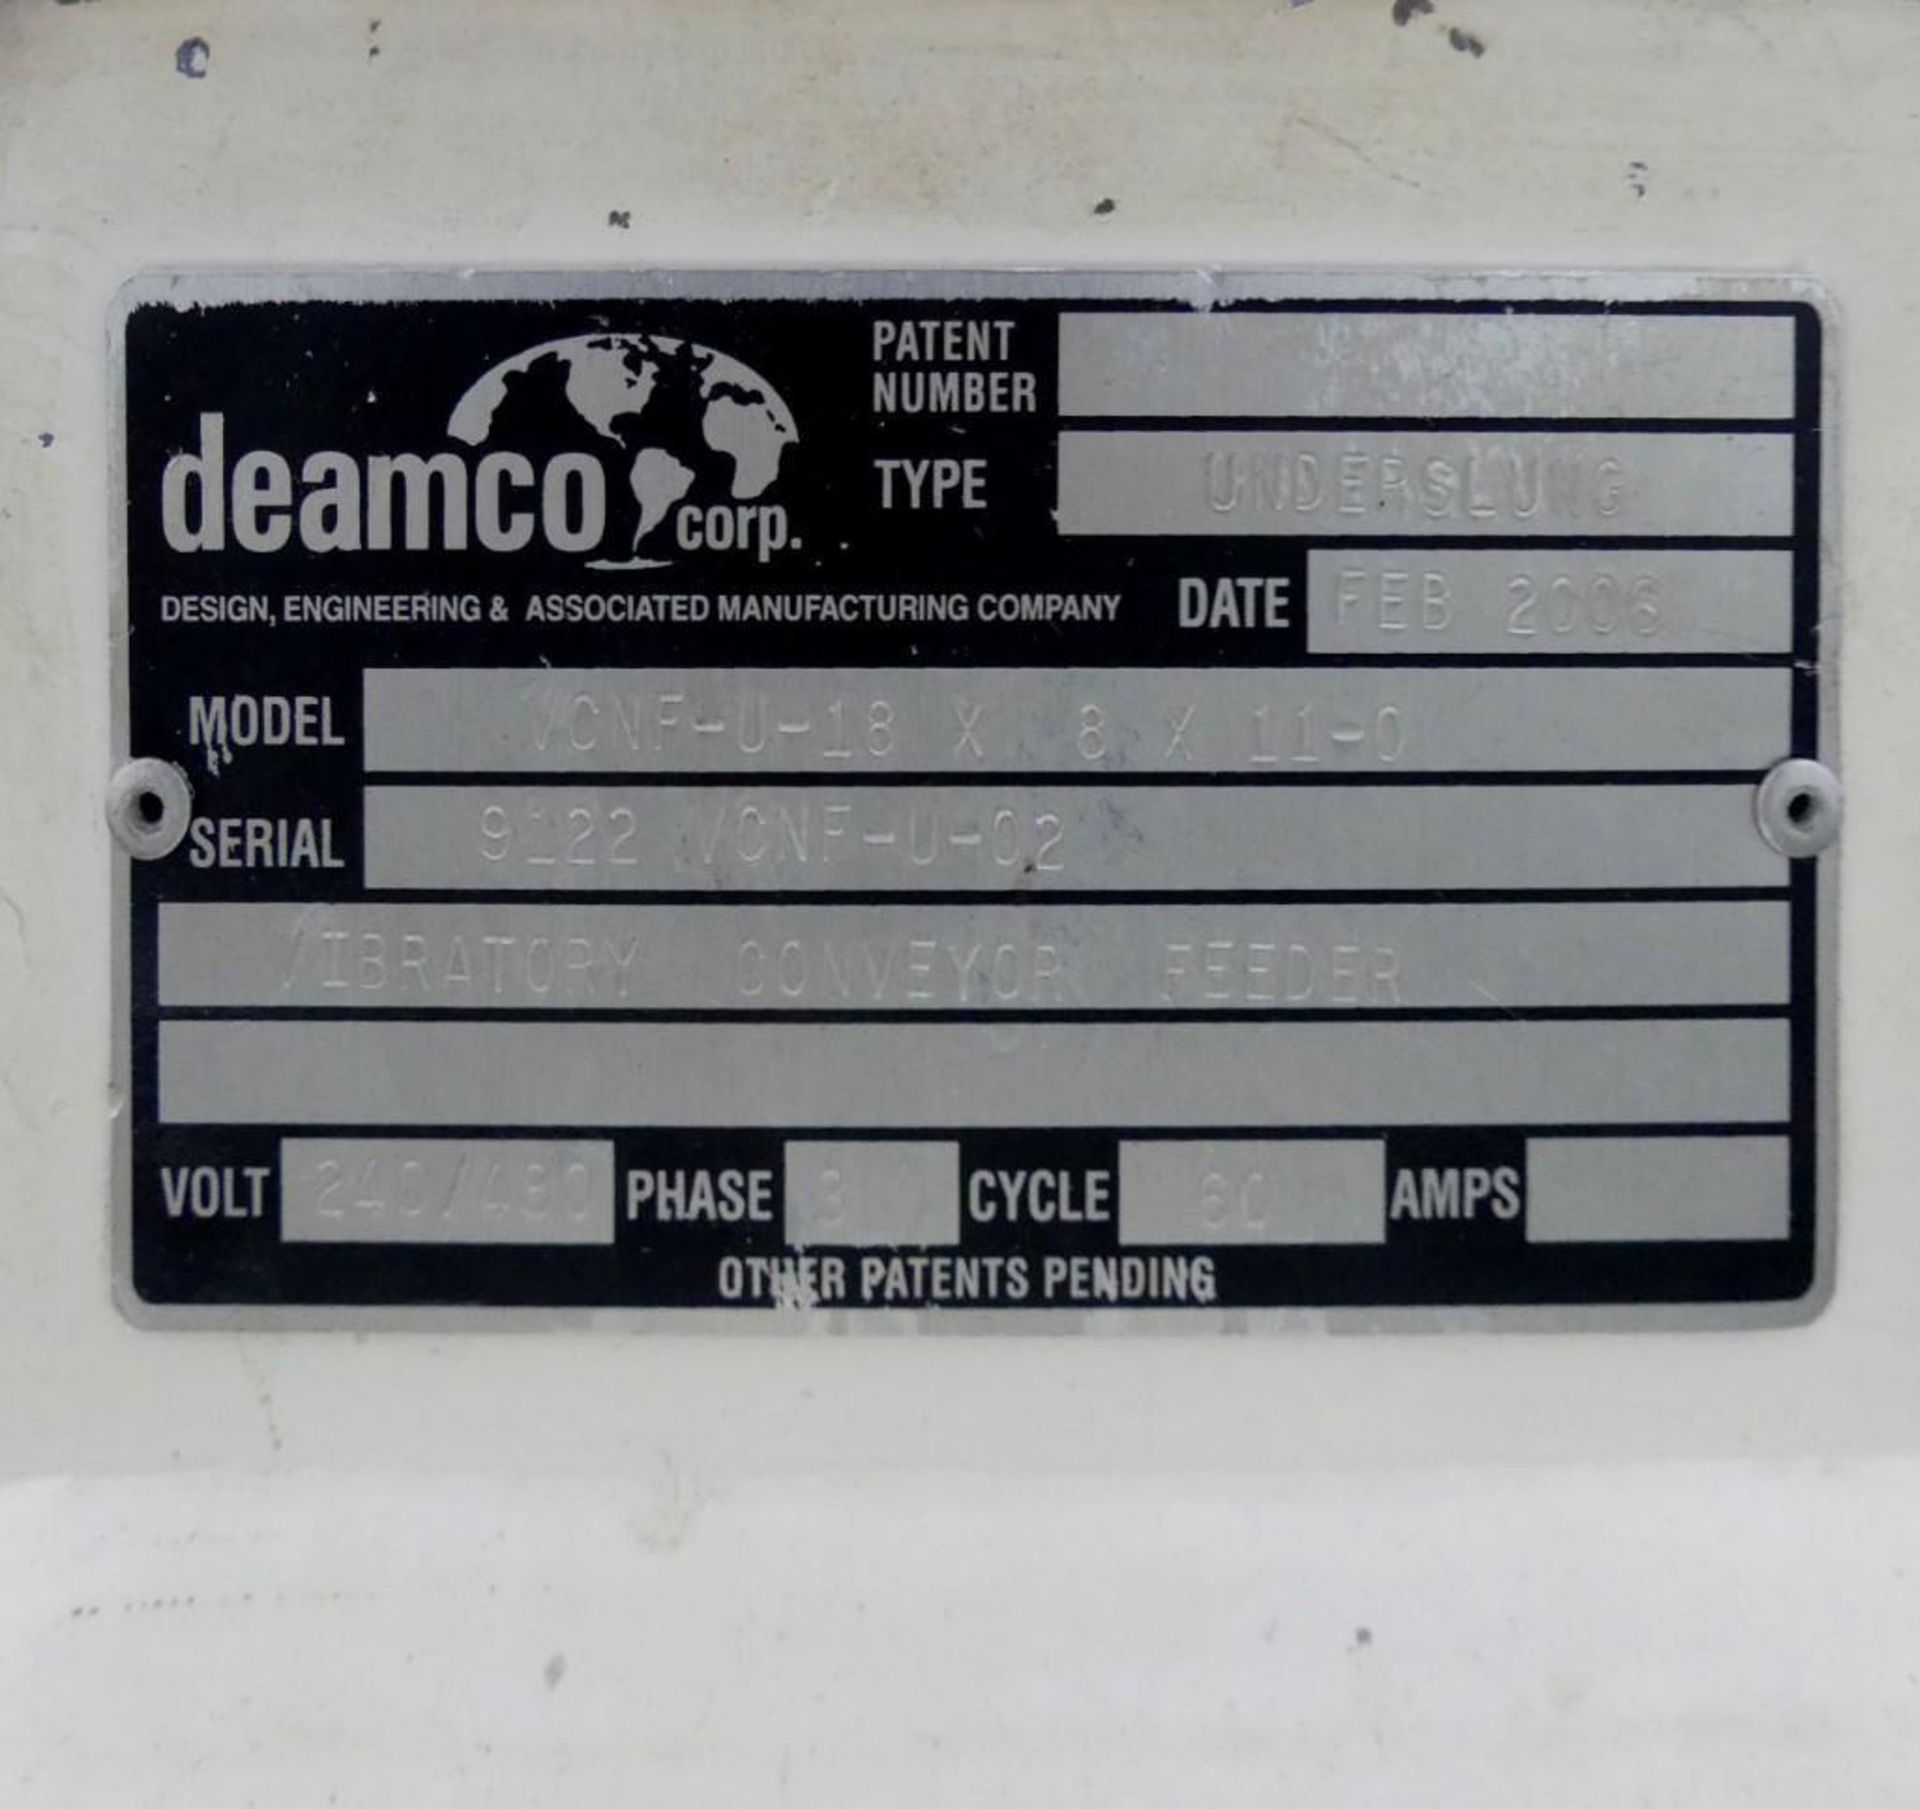 Deamco VCNF-U-18 132"L x 18"W Vibratory Conveyor - Image 12 of 12